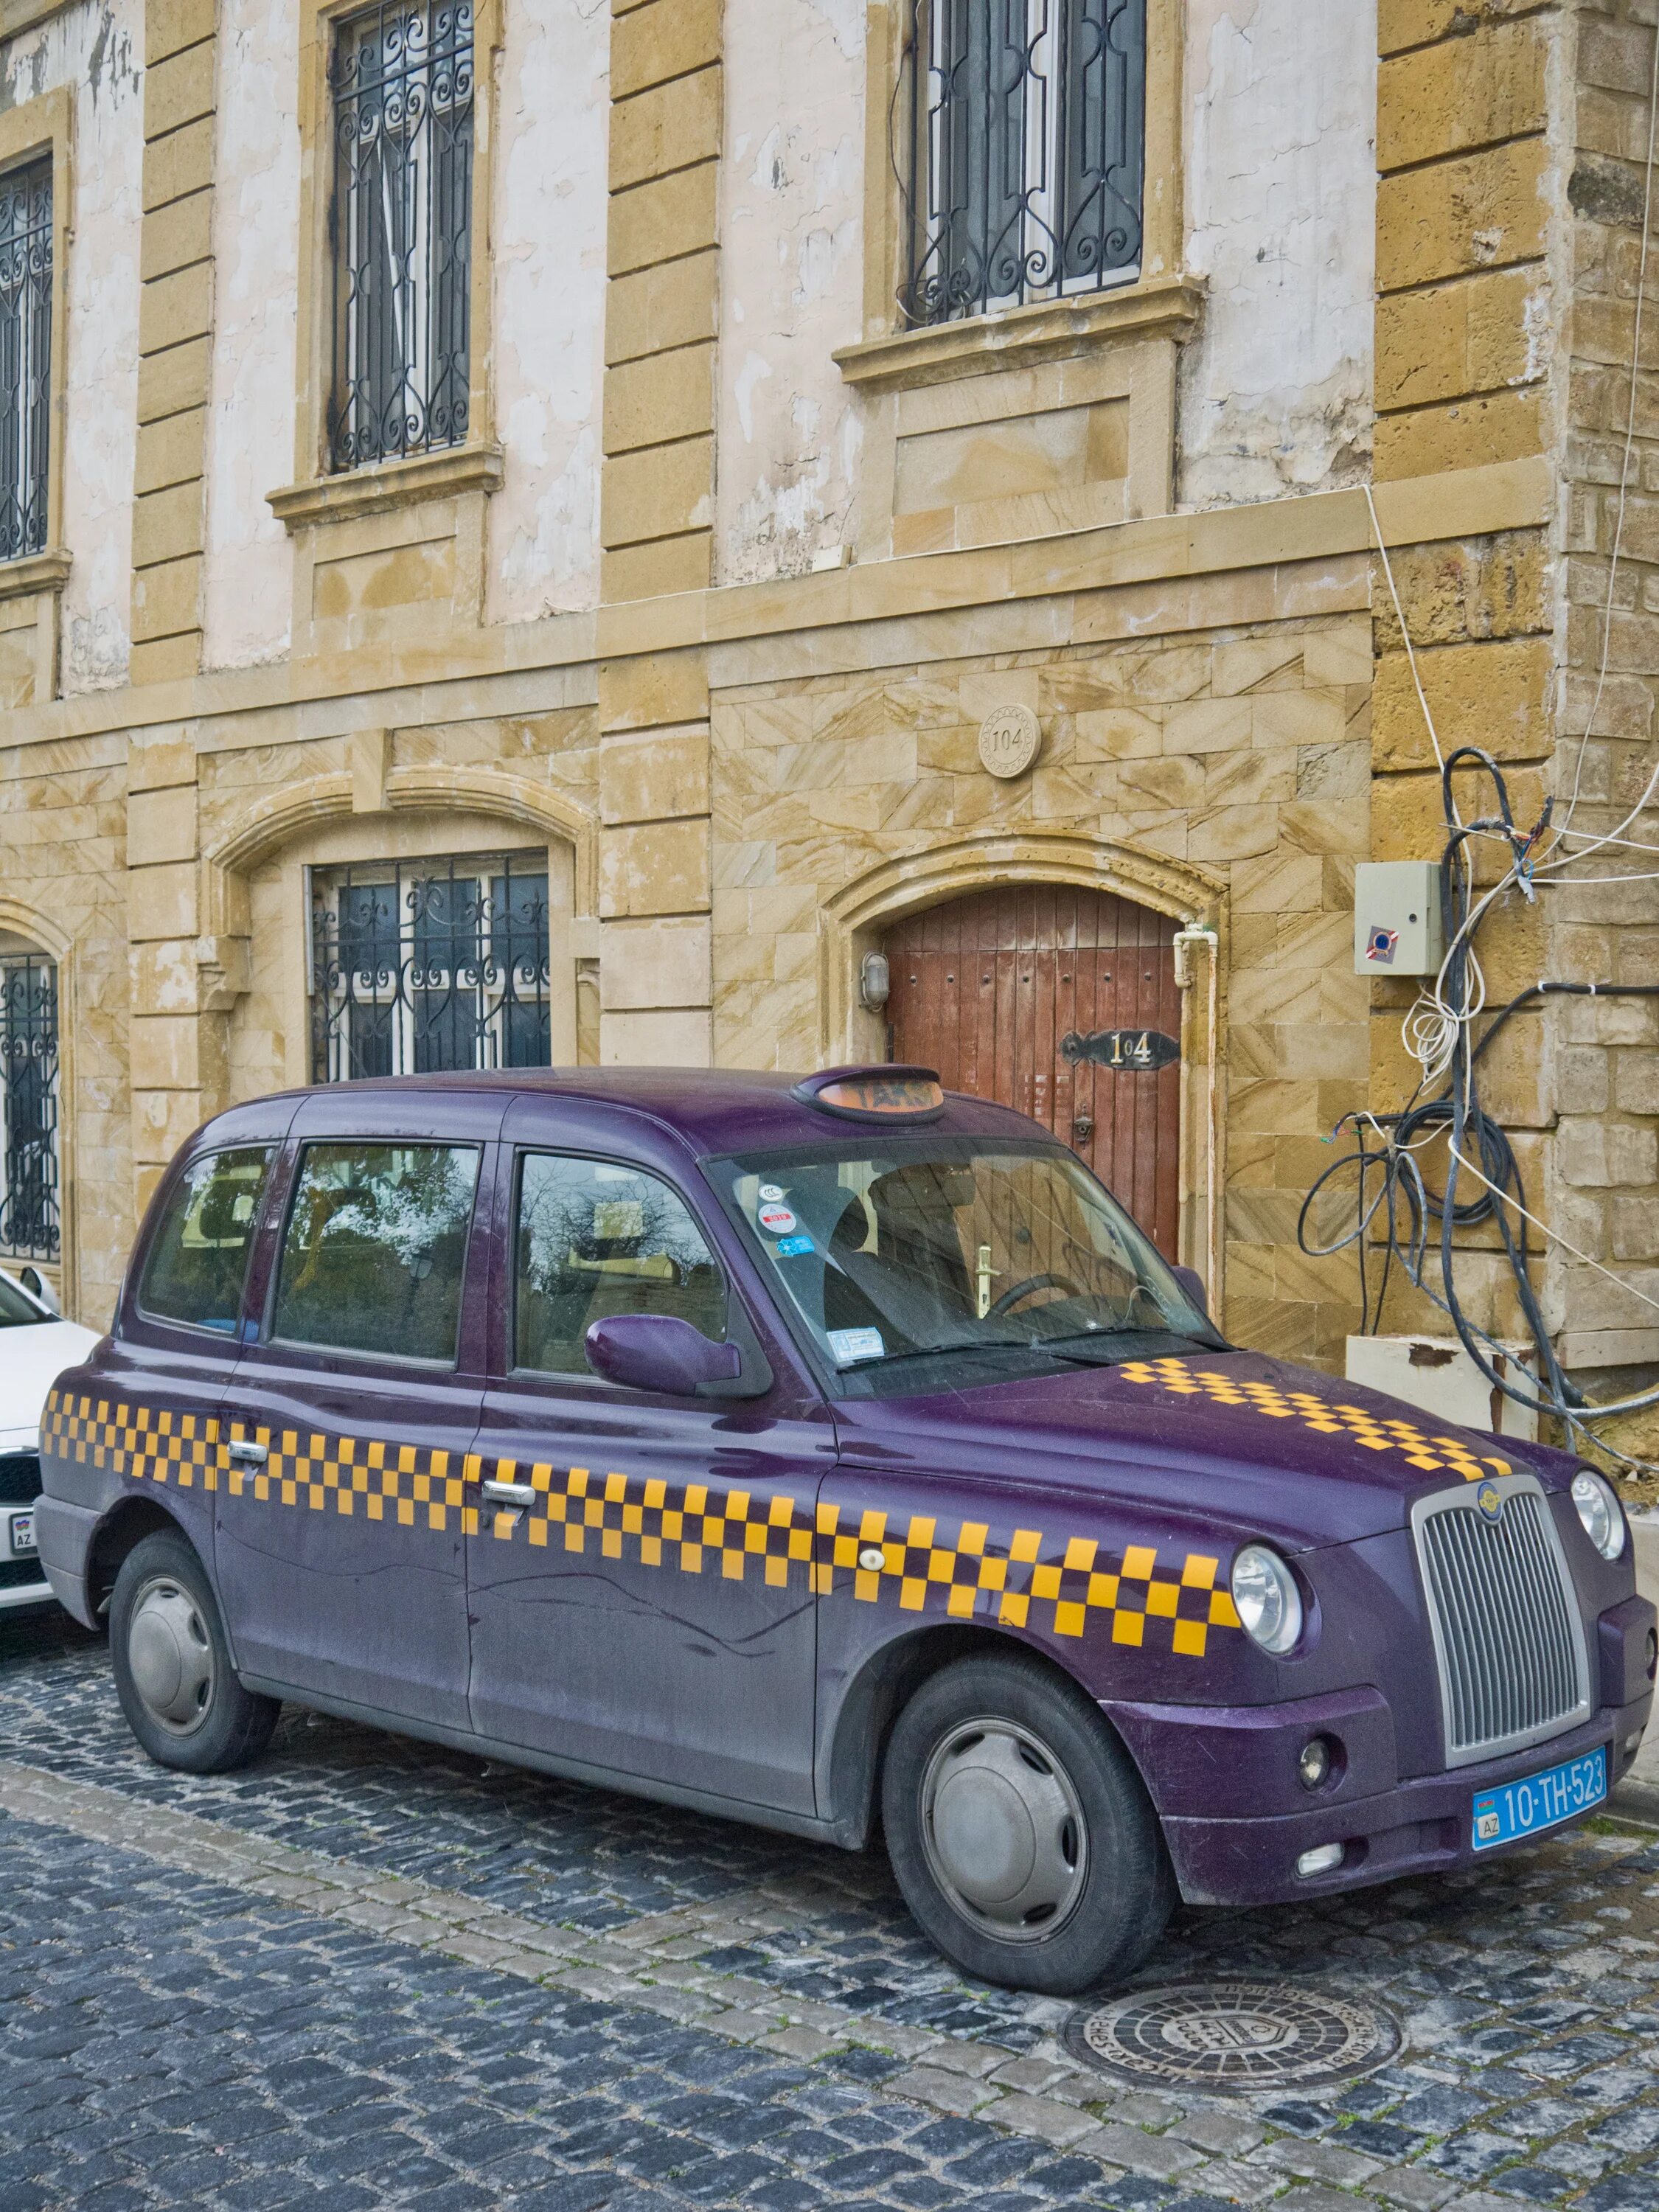 Такси в Баку баклажан. КЭБ В Баку. Такси в Баку кэбы. Бакинское такси. Такси в азербайджане